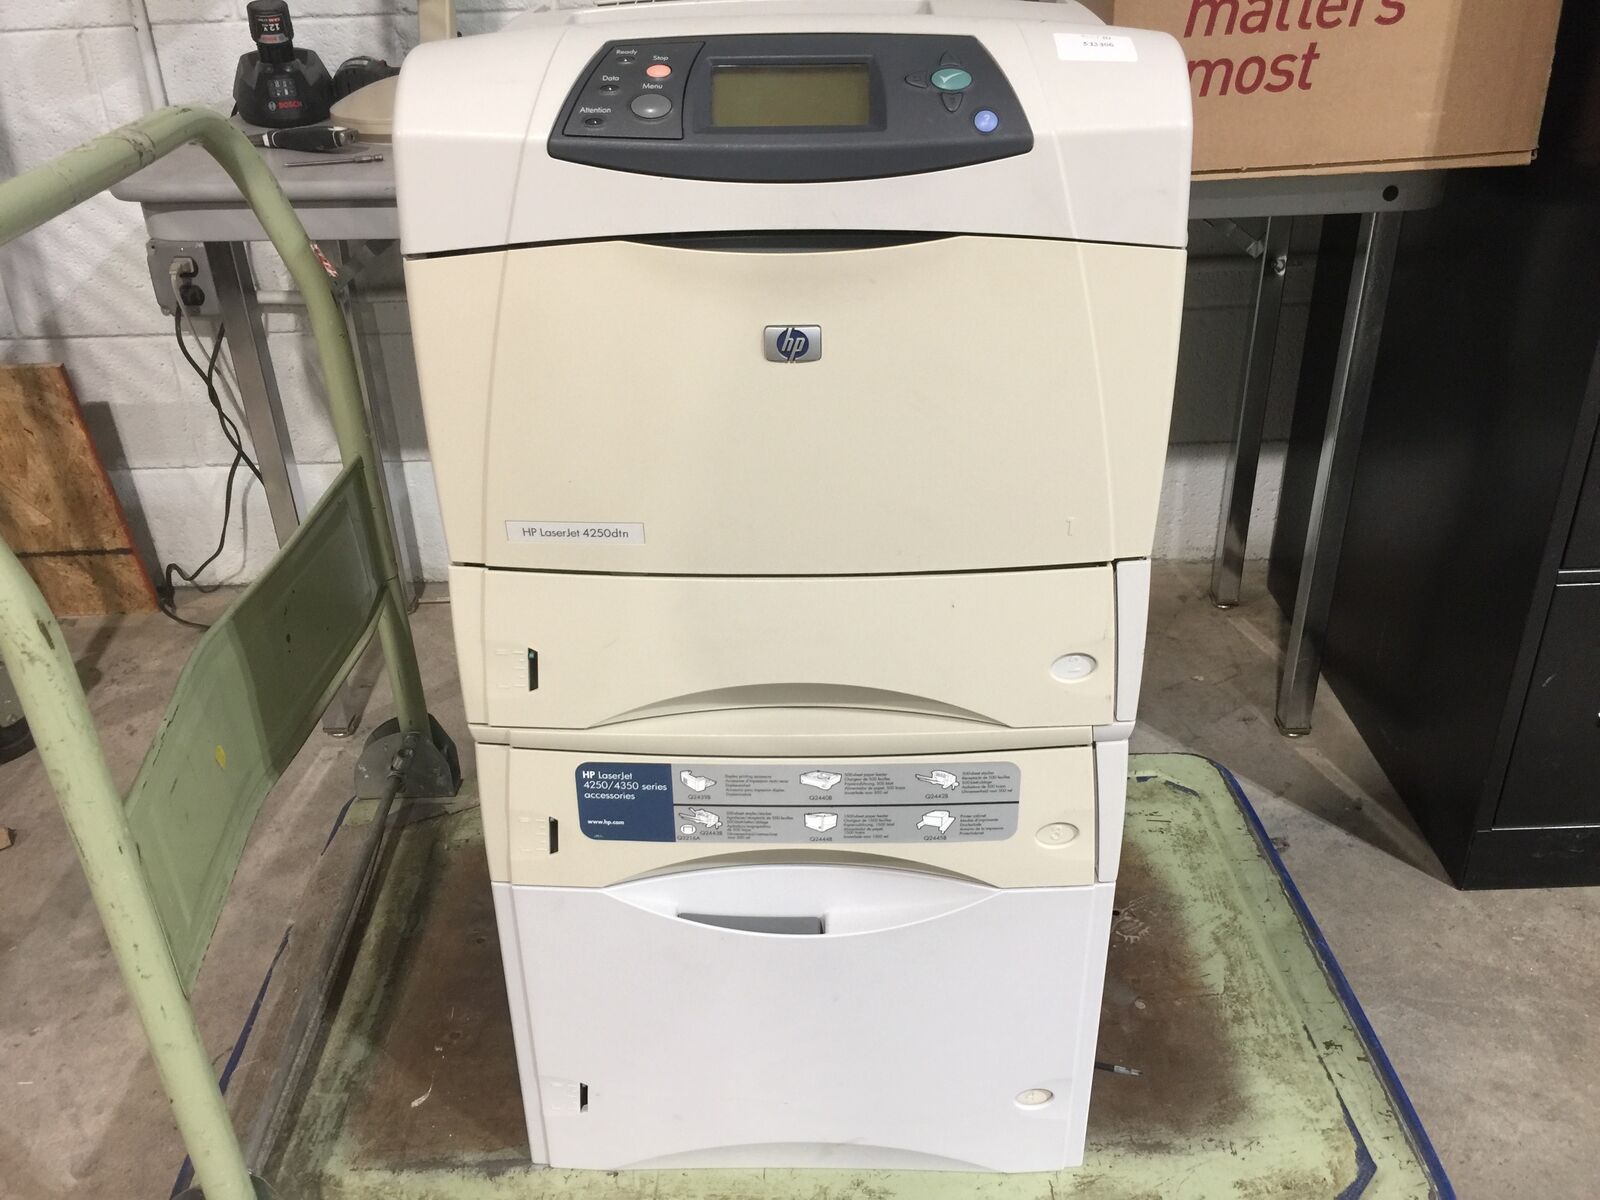 HP LaserJet 4250dtn Monochrome Laser Printer w/ ALL TRAYS & Toner - TESTED/RESET